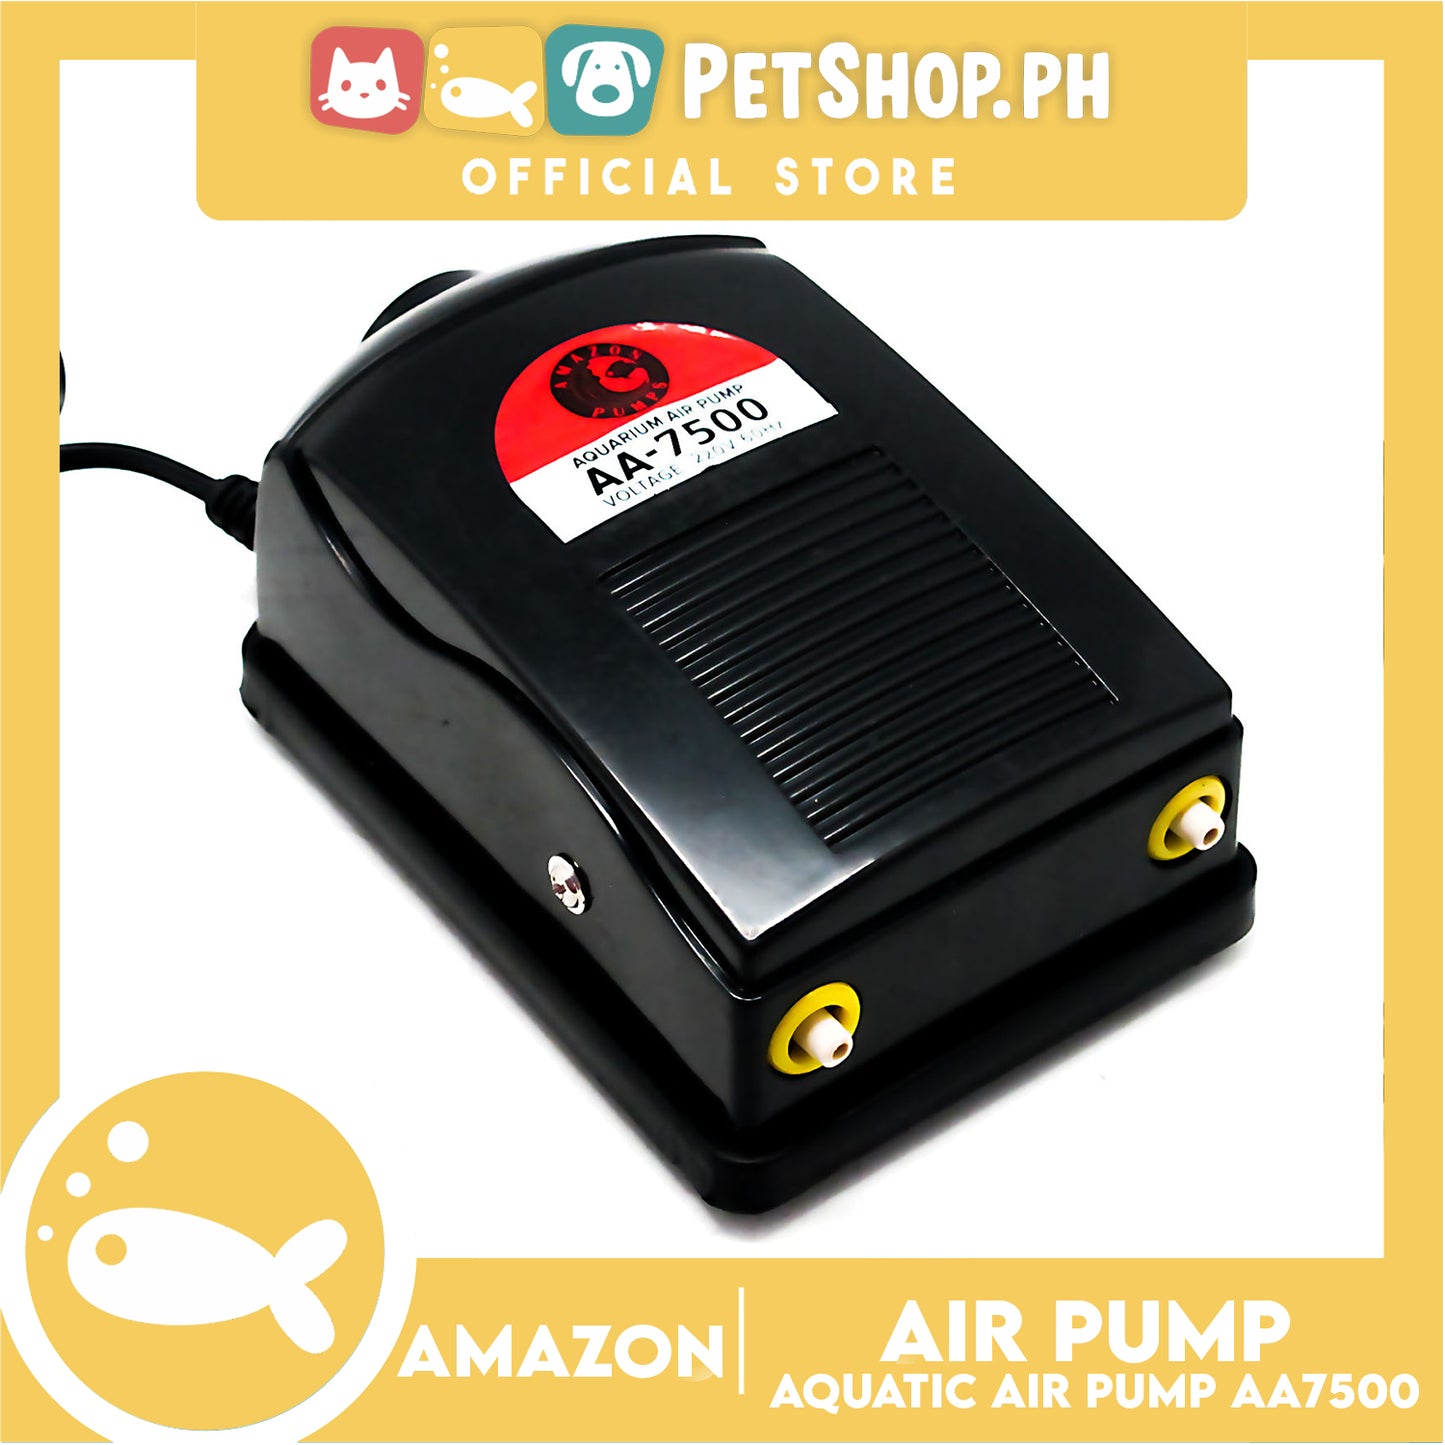 Amazon Double Air Pump AA7500